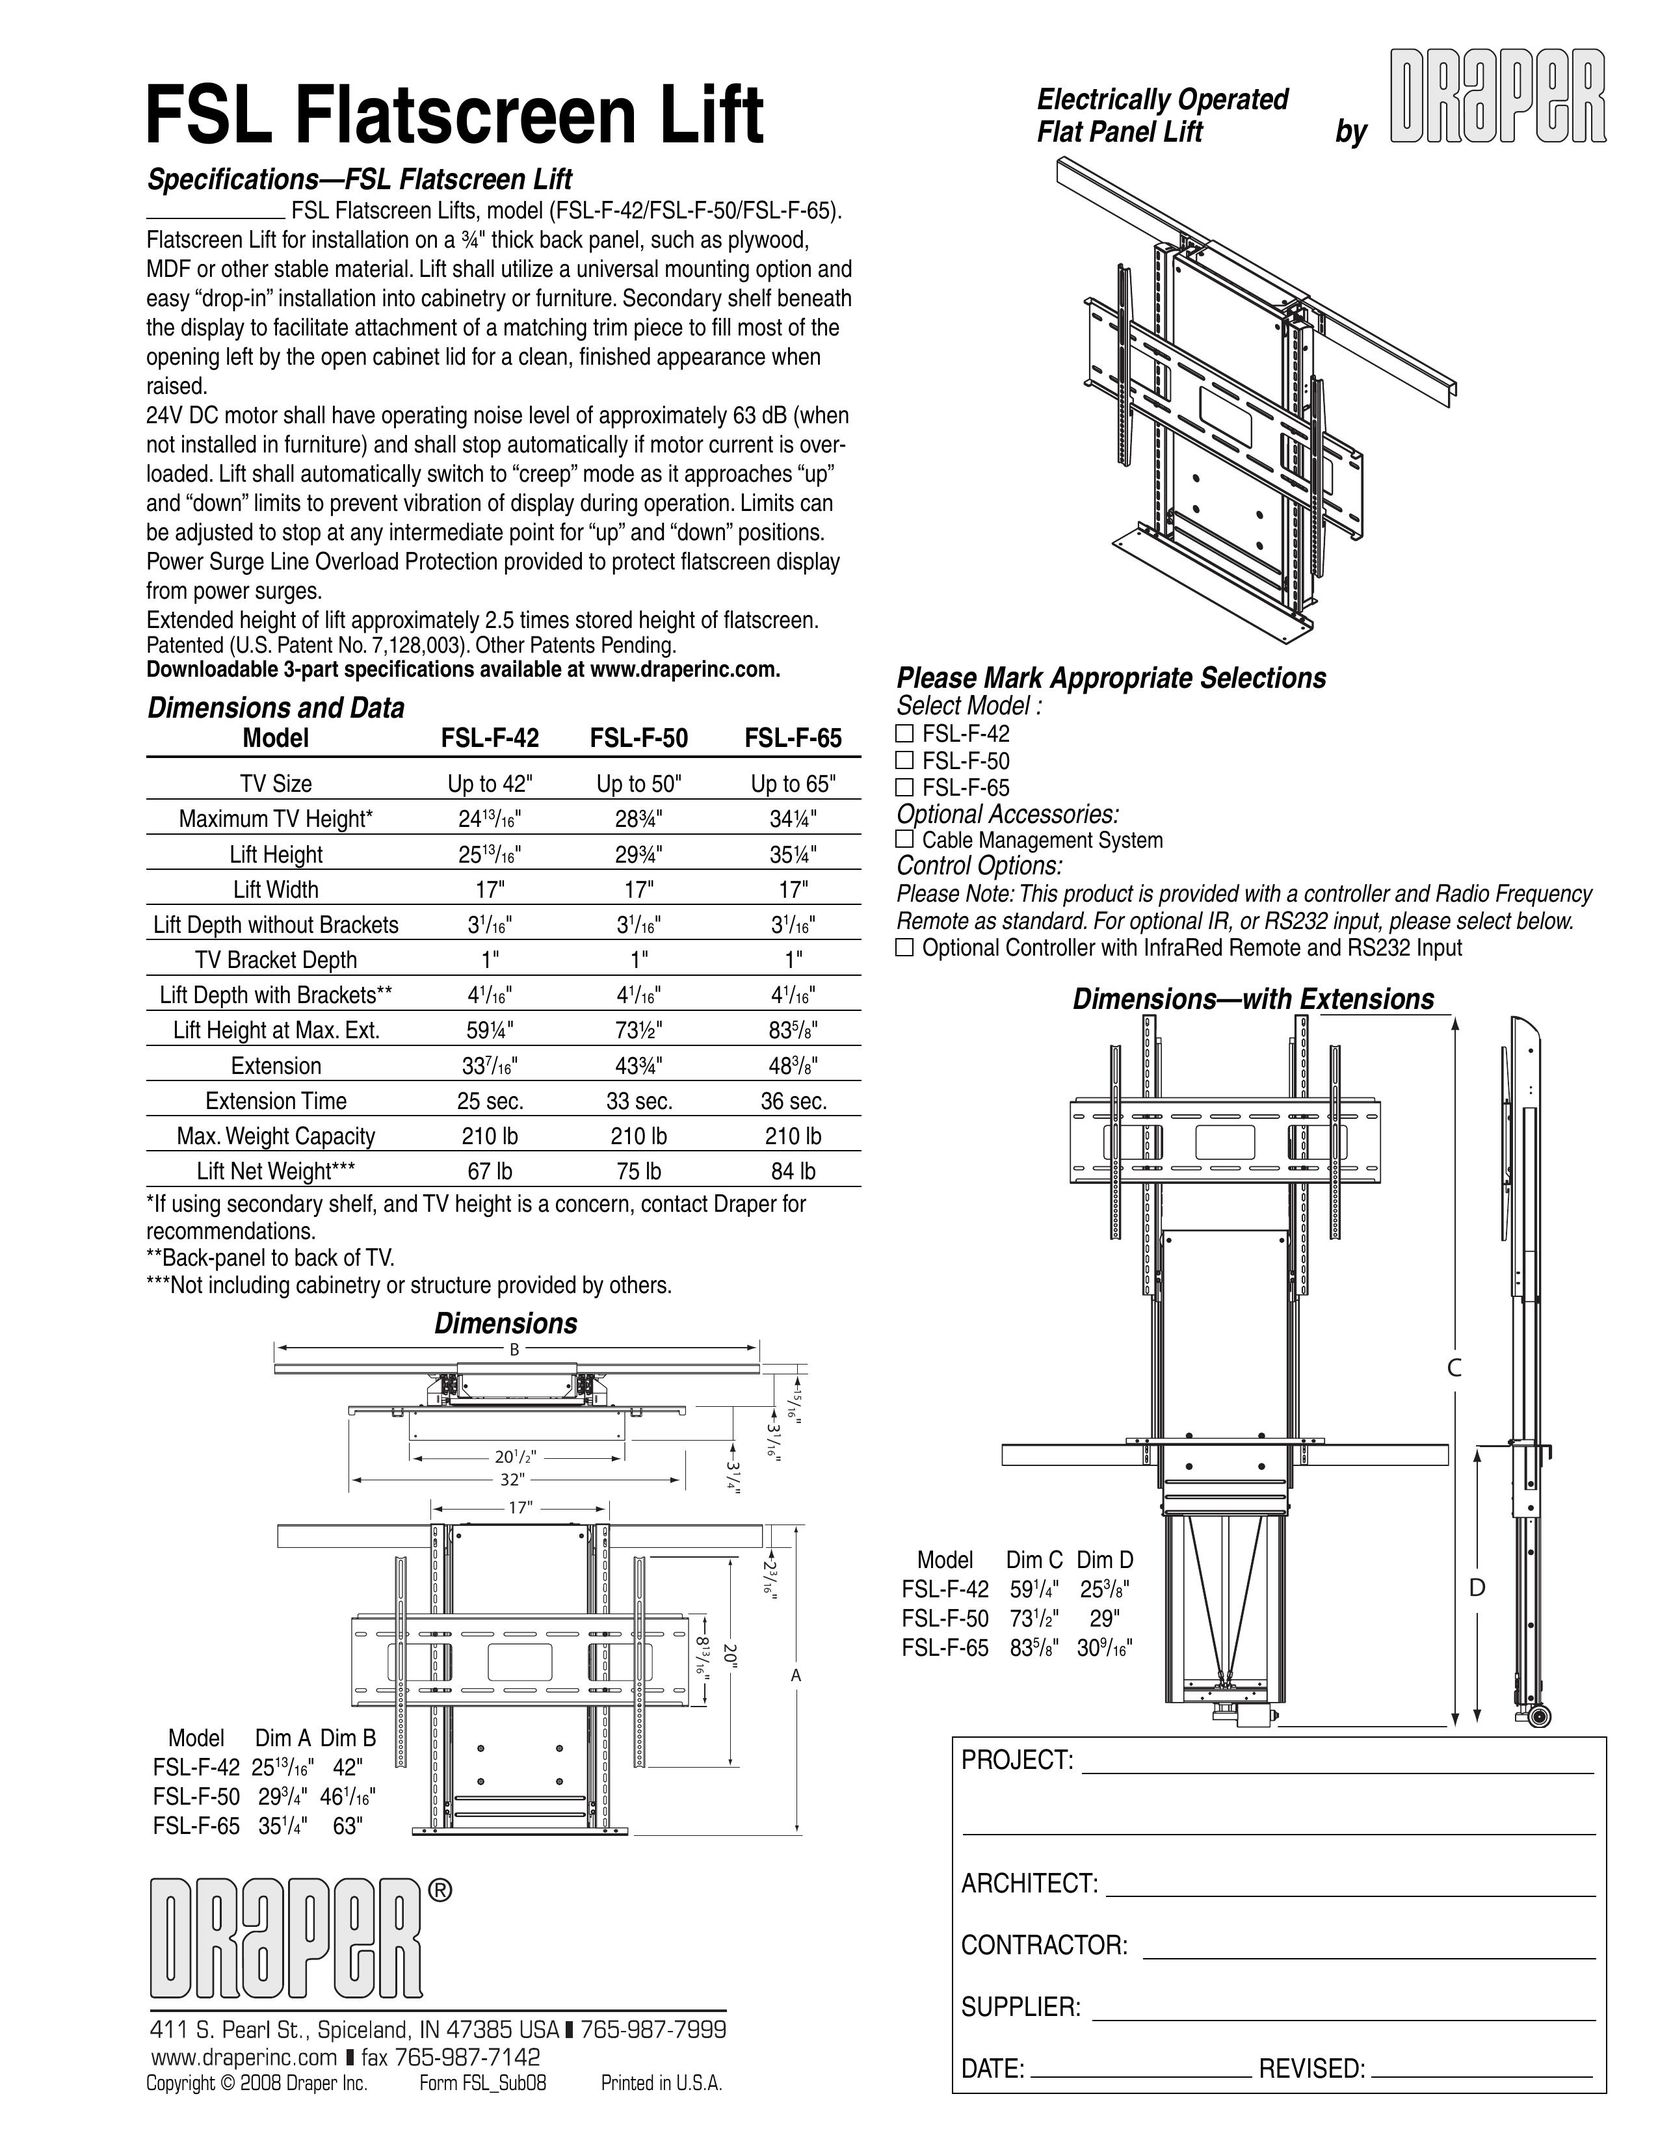 Draper FSL-F-42 Indoor Furnishings User Manual